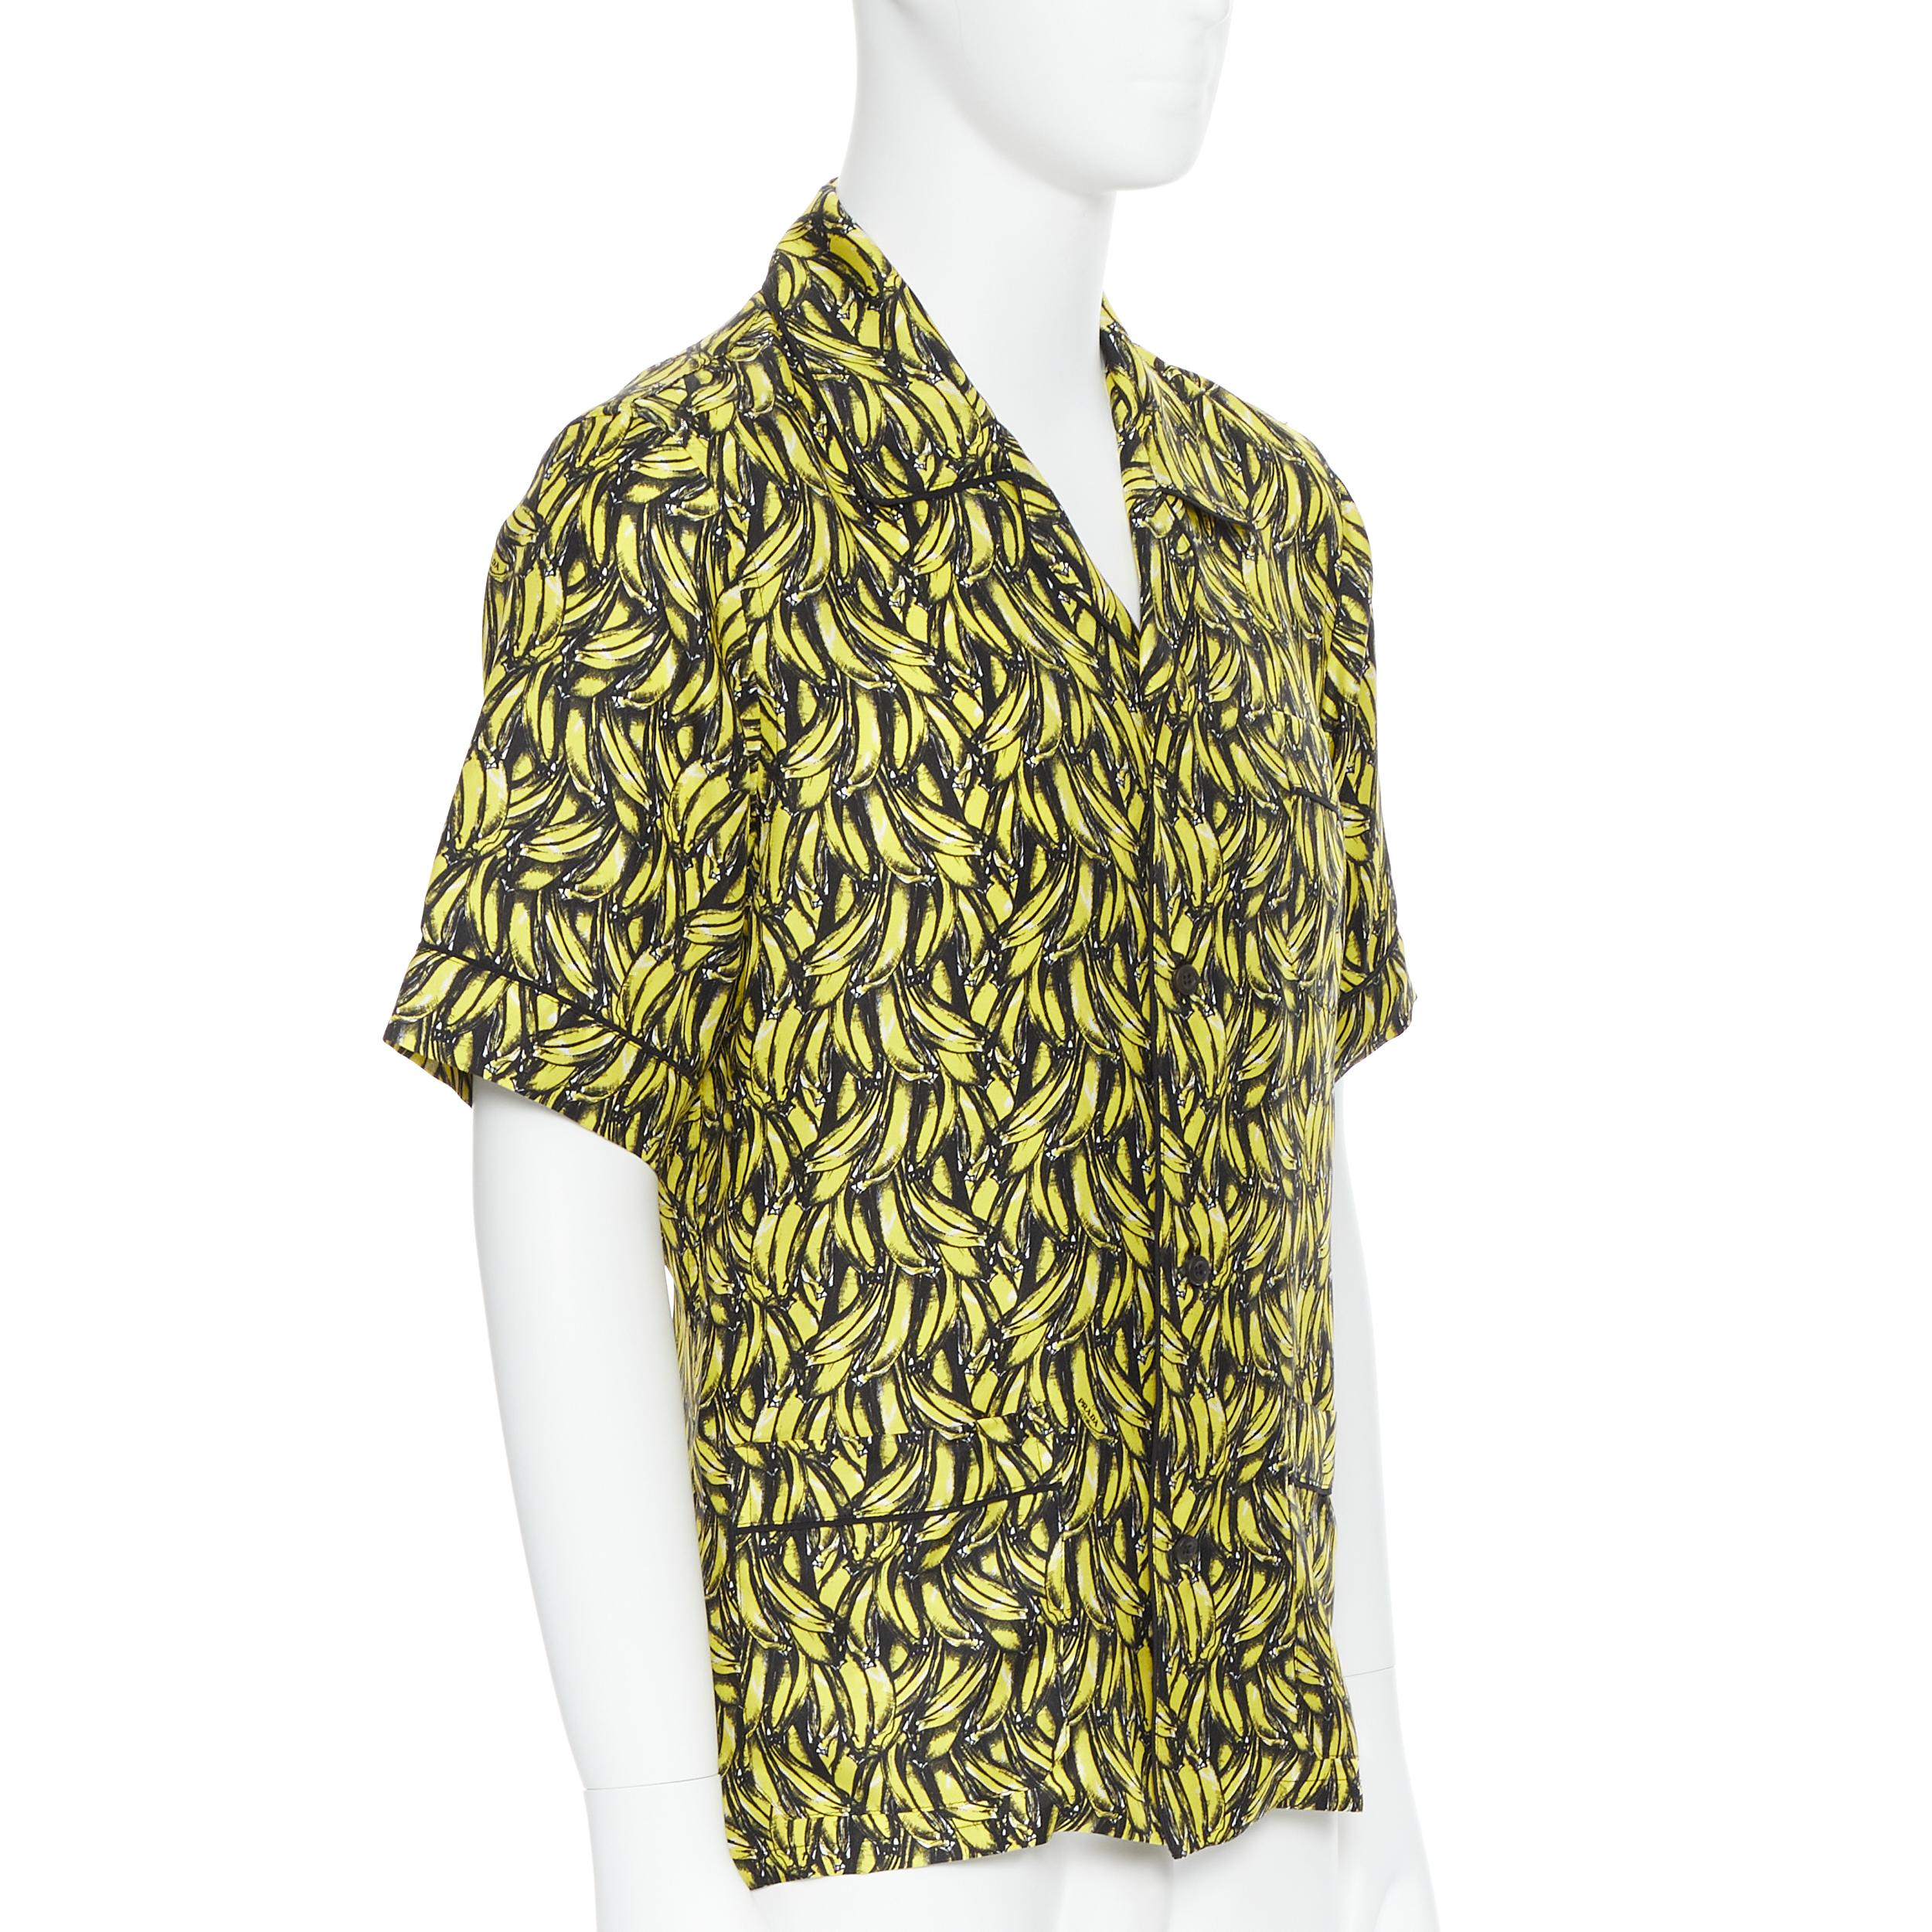 Black new PRADA 2018 iconic Banana yellow 100% silk short sleeve bowling shirt S